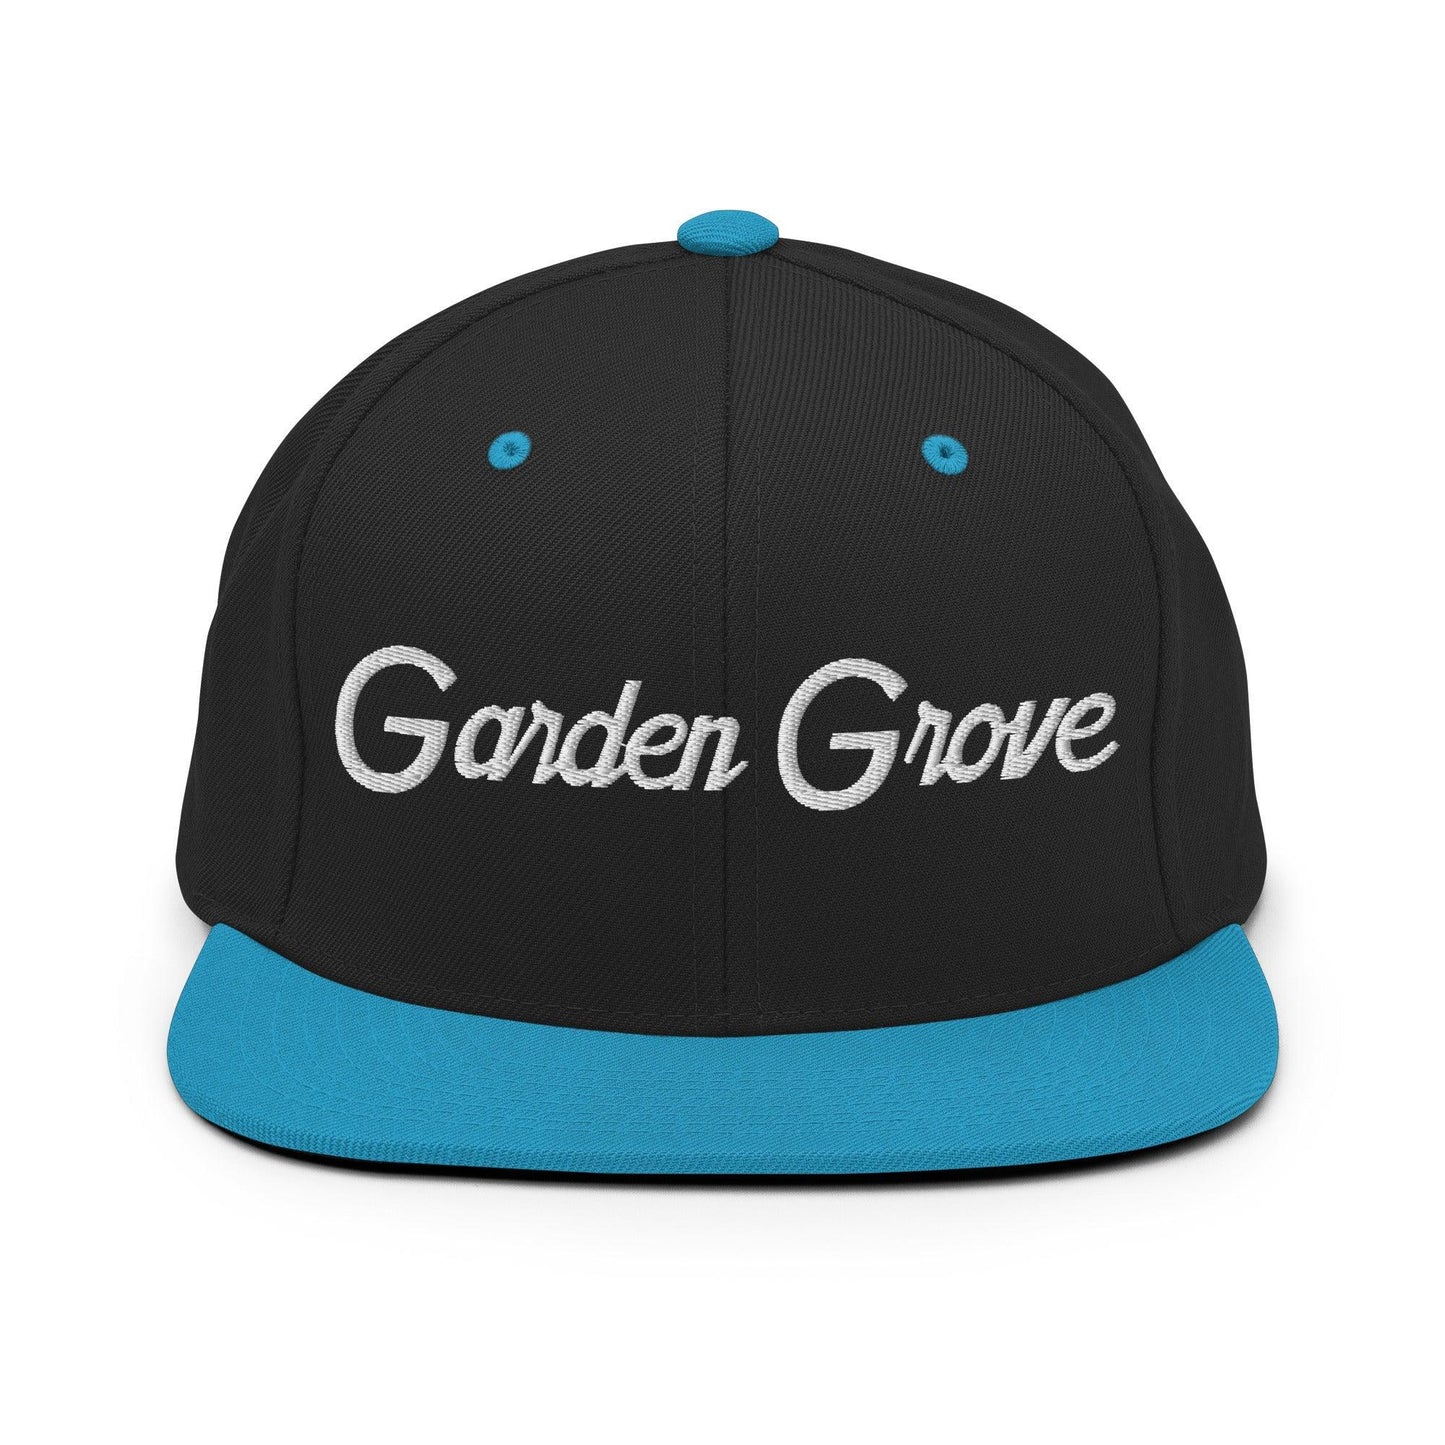 Garden Grove Script Snapback Hat Black Teal